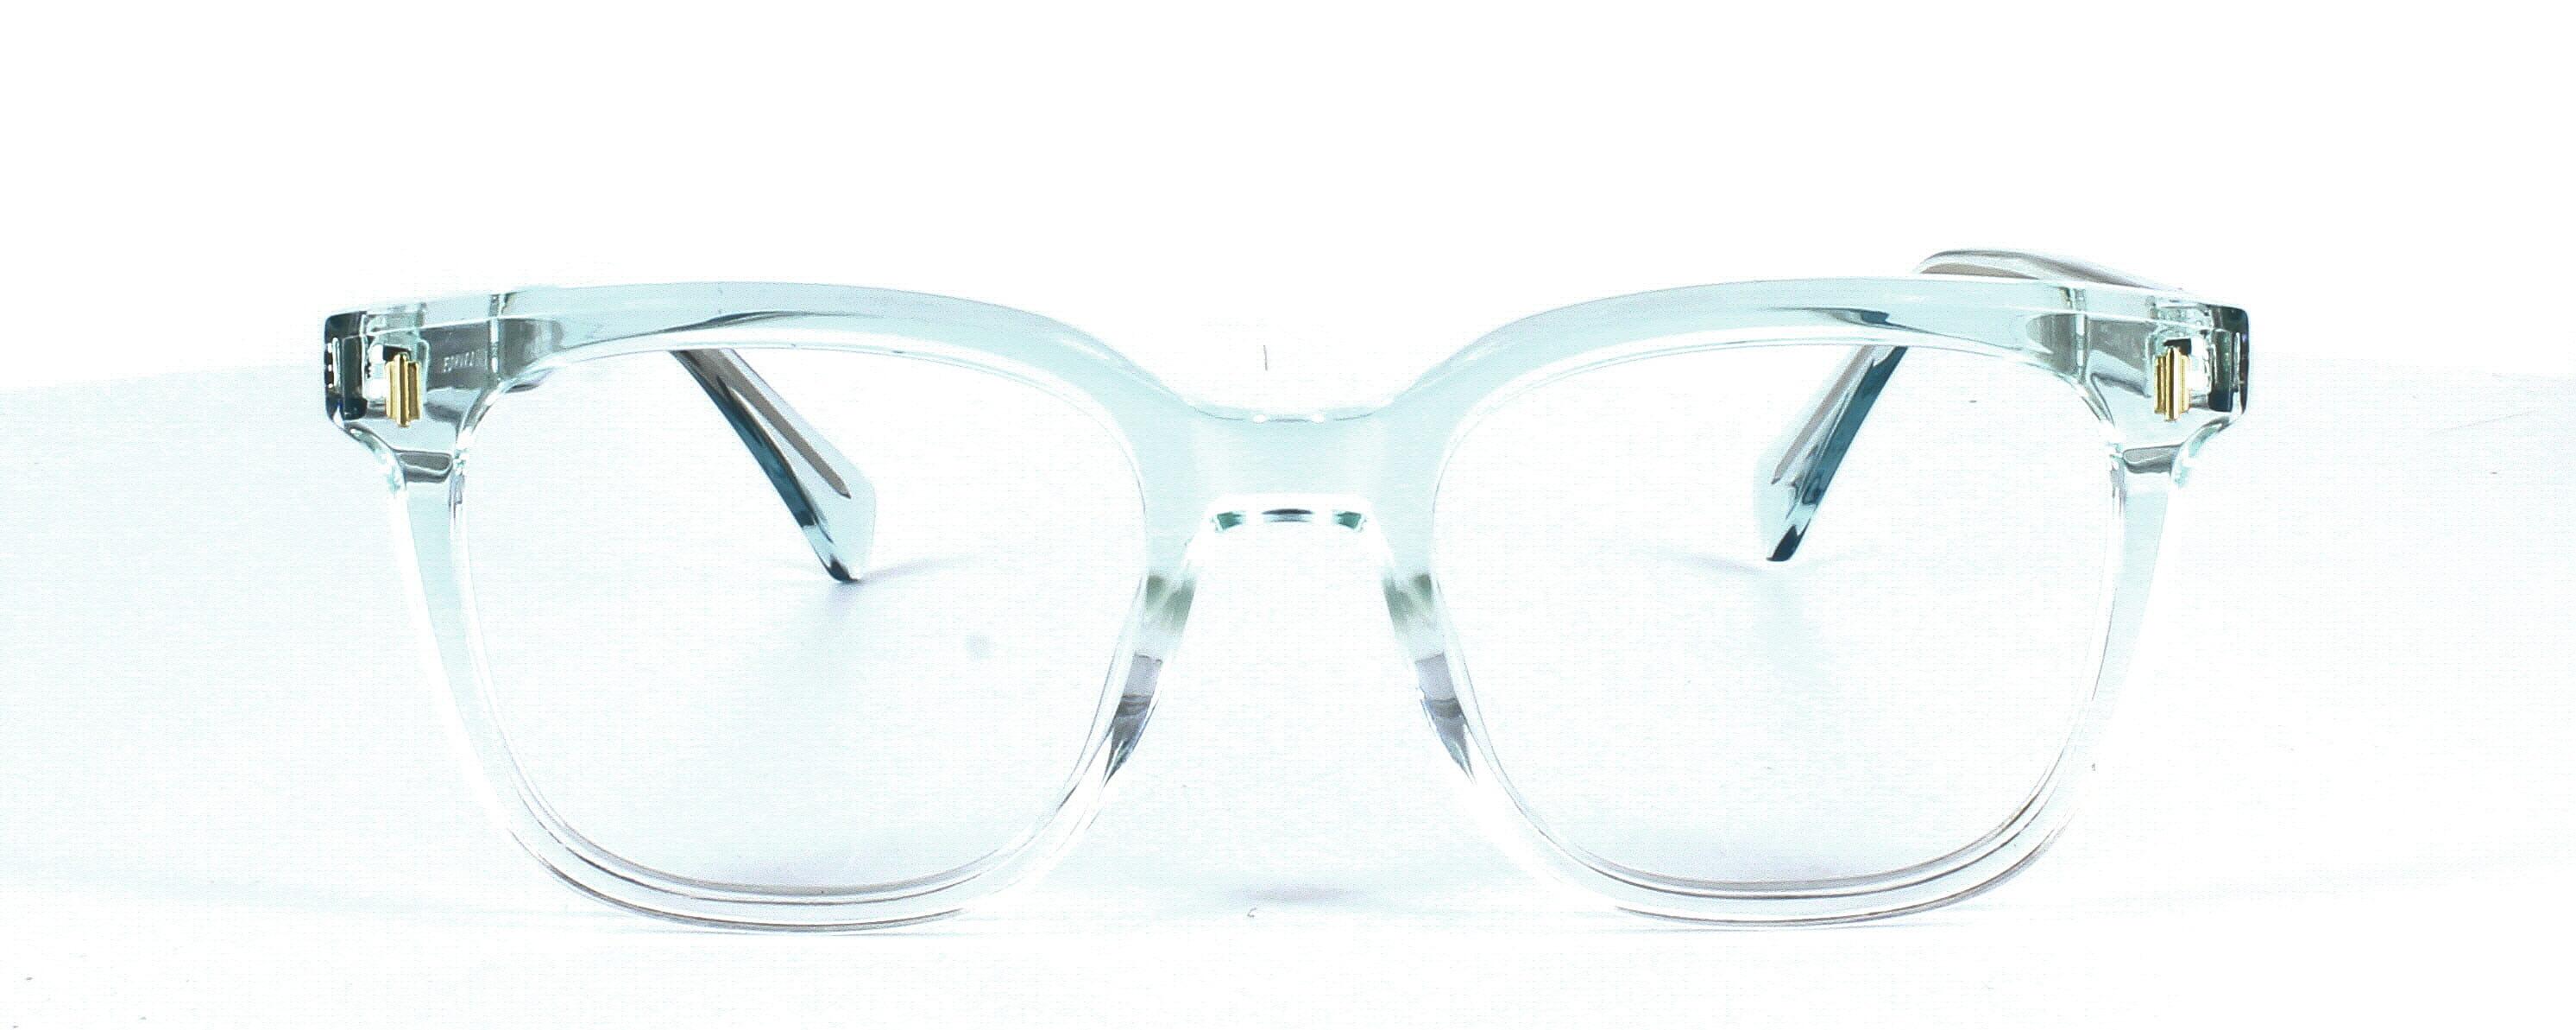 Edward Scotts TRBC901 - Lt crystal blue - Unisex acetate retro style glasses frame with square shaped lenses - image view 2